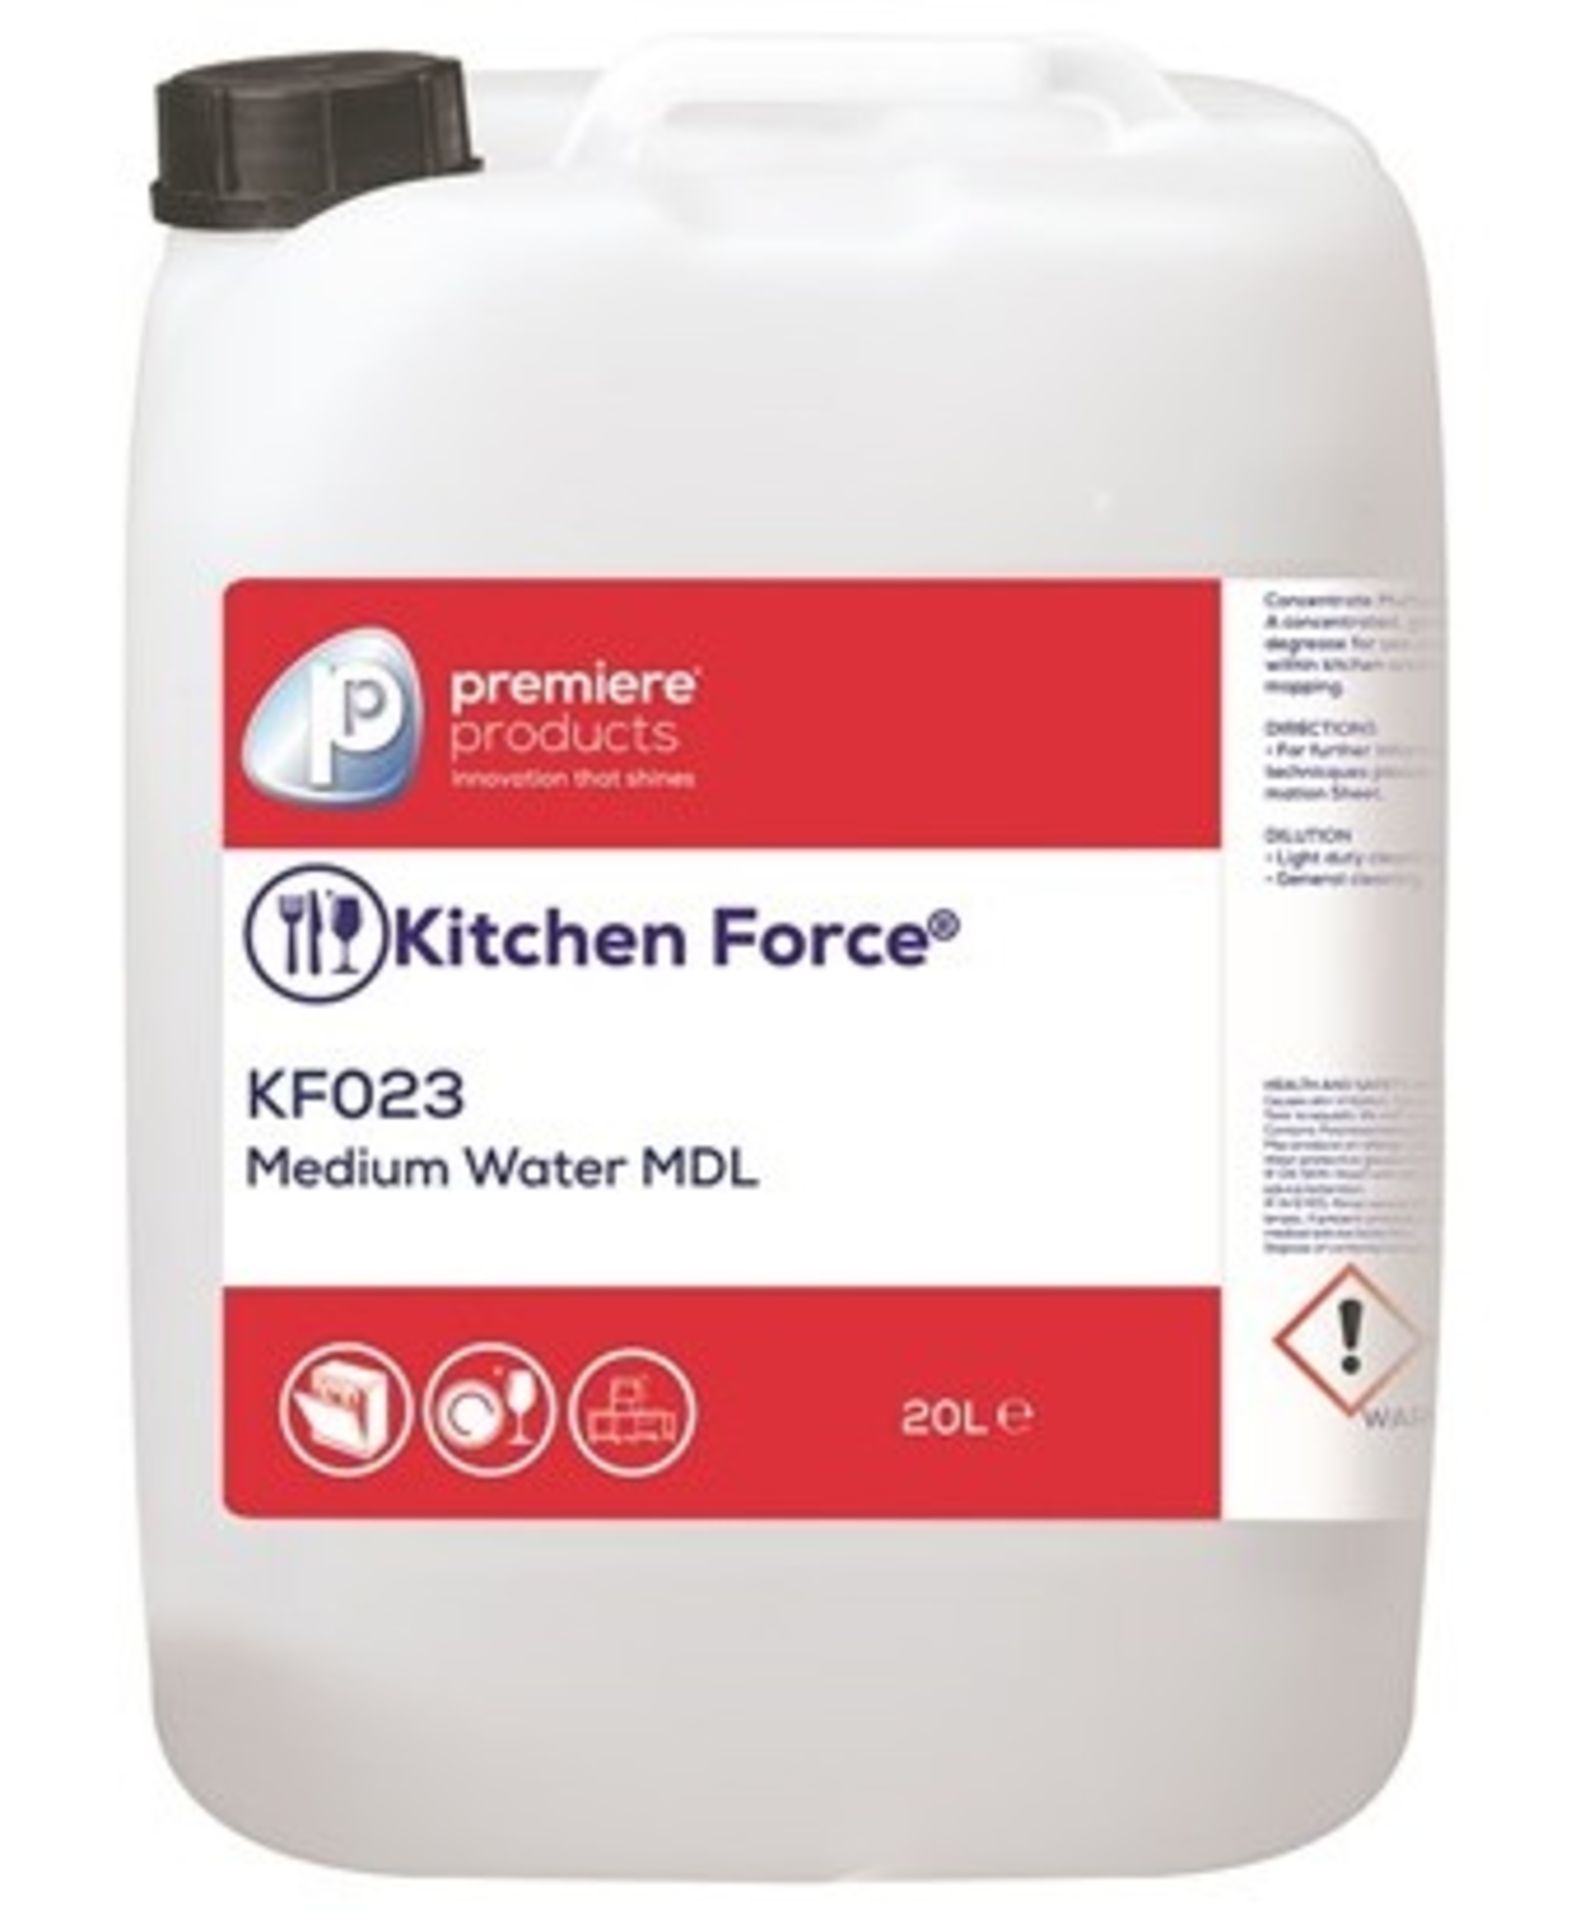 1 x EcoForce 20 Litre Medium Water MDL - Commercial Dishwasher Dertergent - Premiere Products - Bran